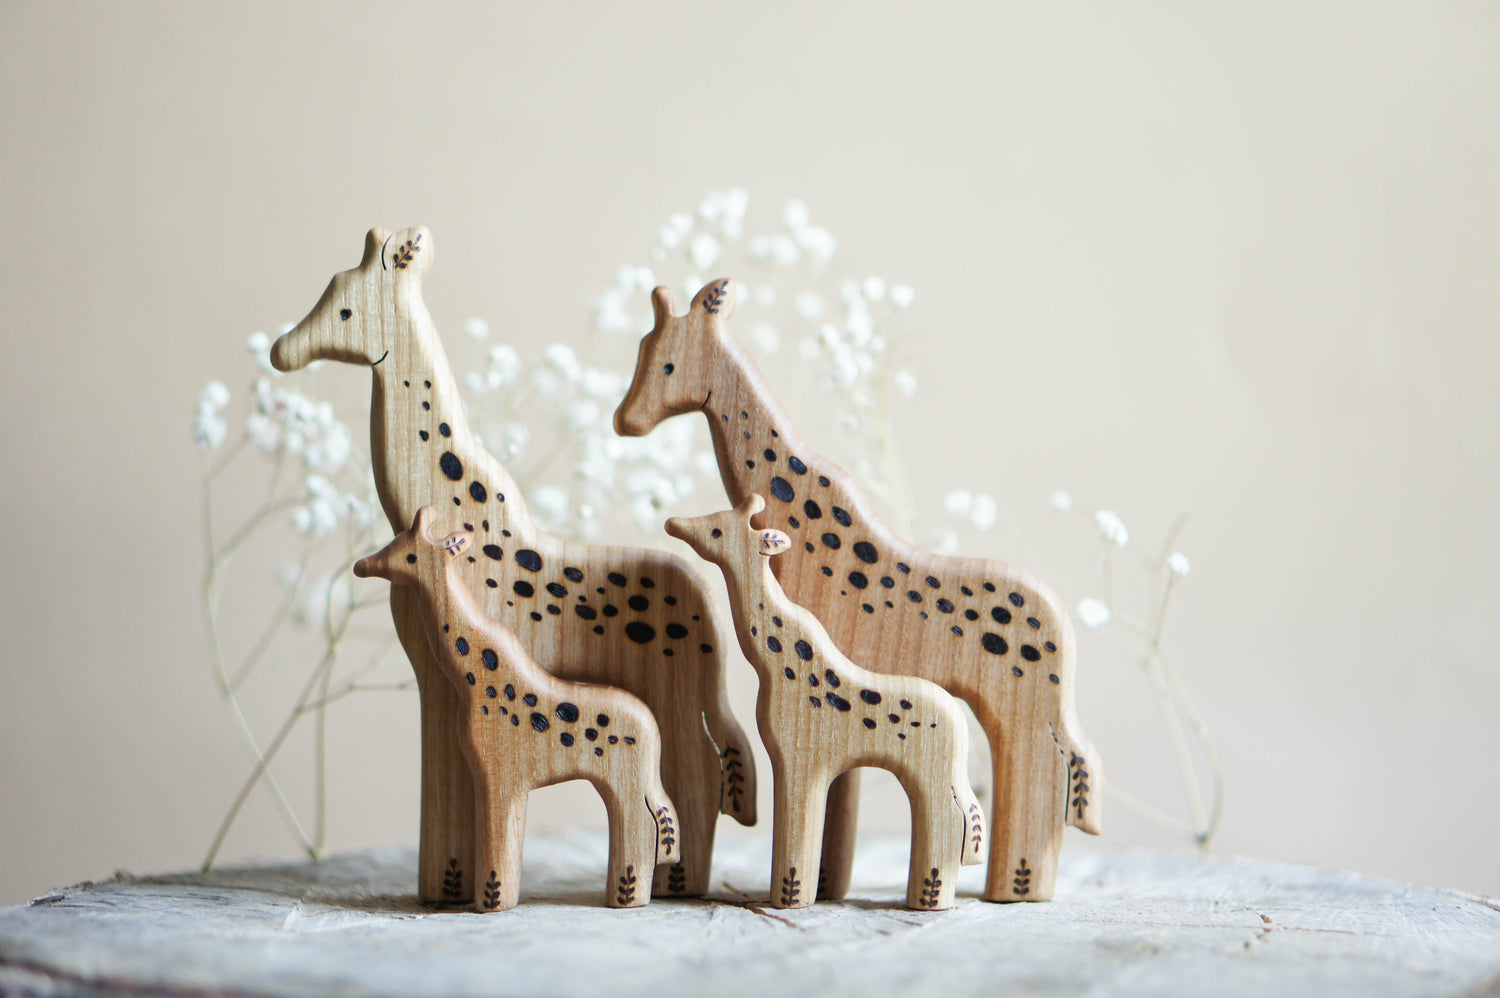 Tiny Fox Hole Wooden Animals Handmade Wooden Set of Giraffes (set of 4)